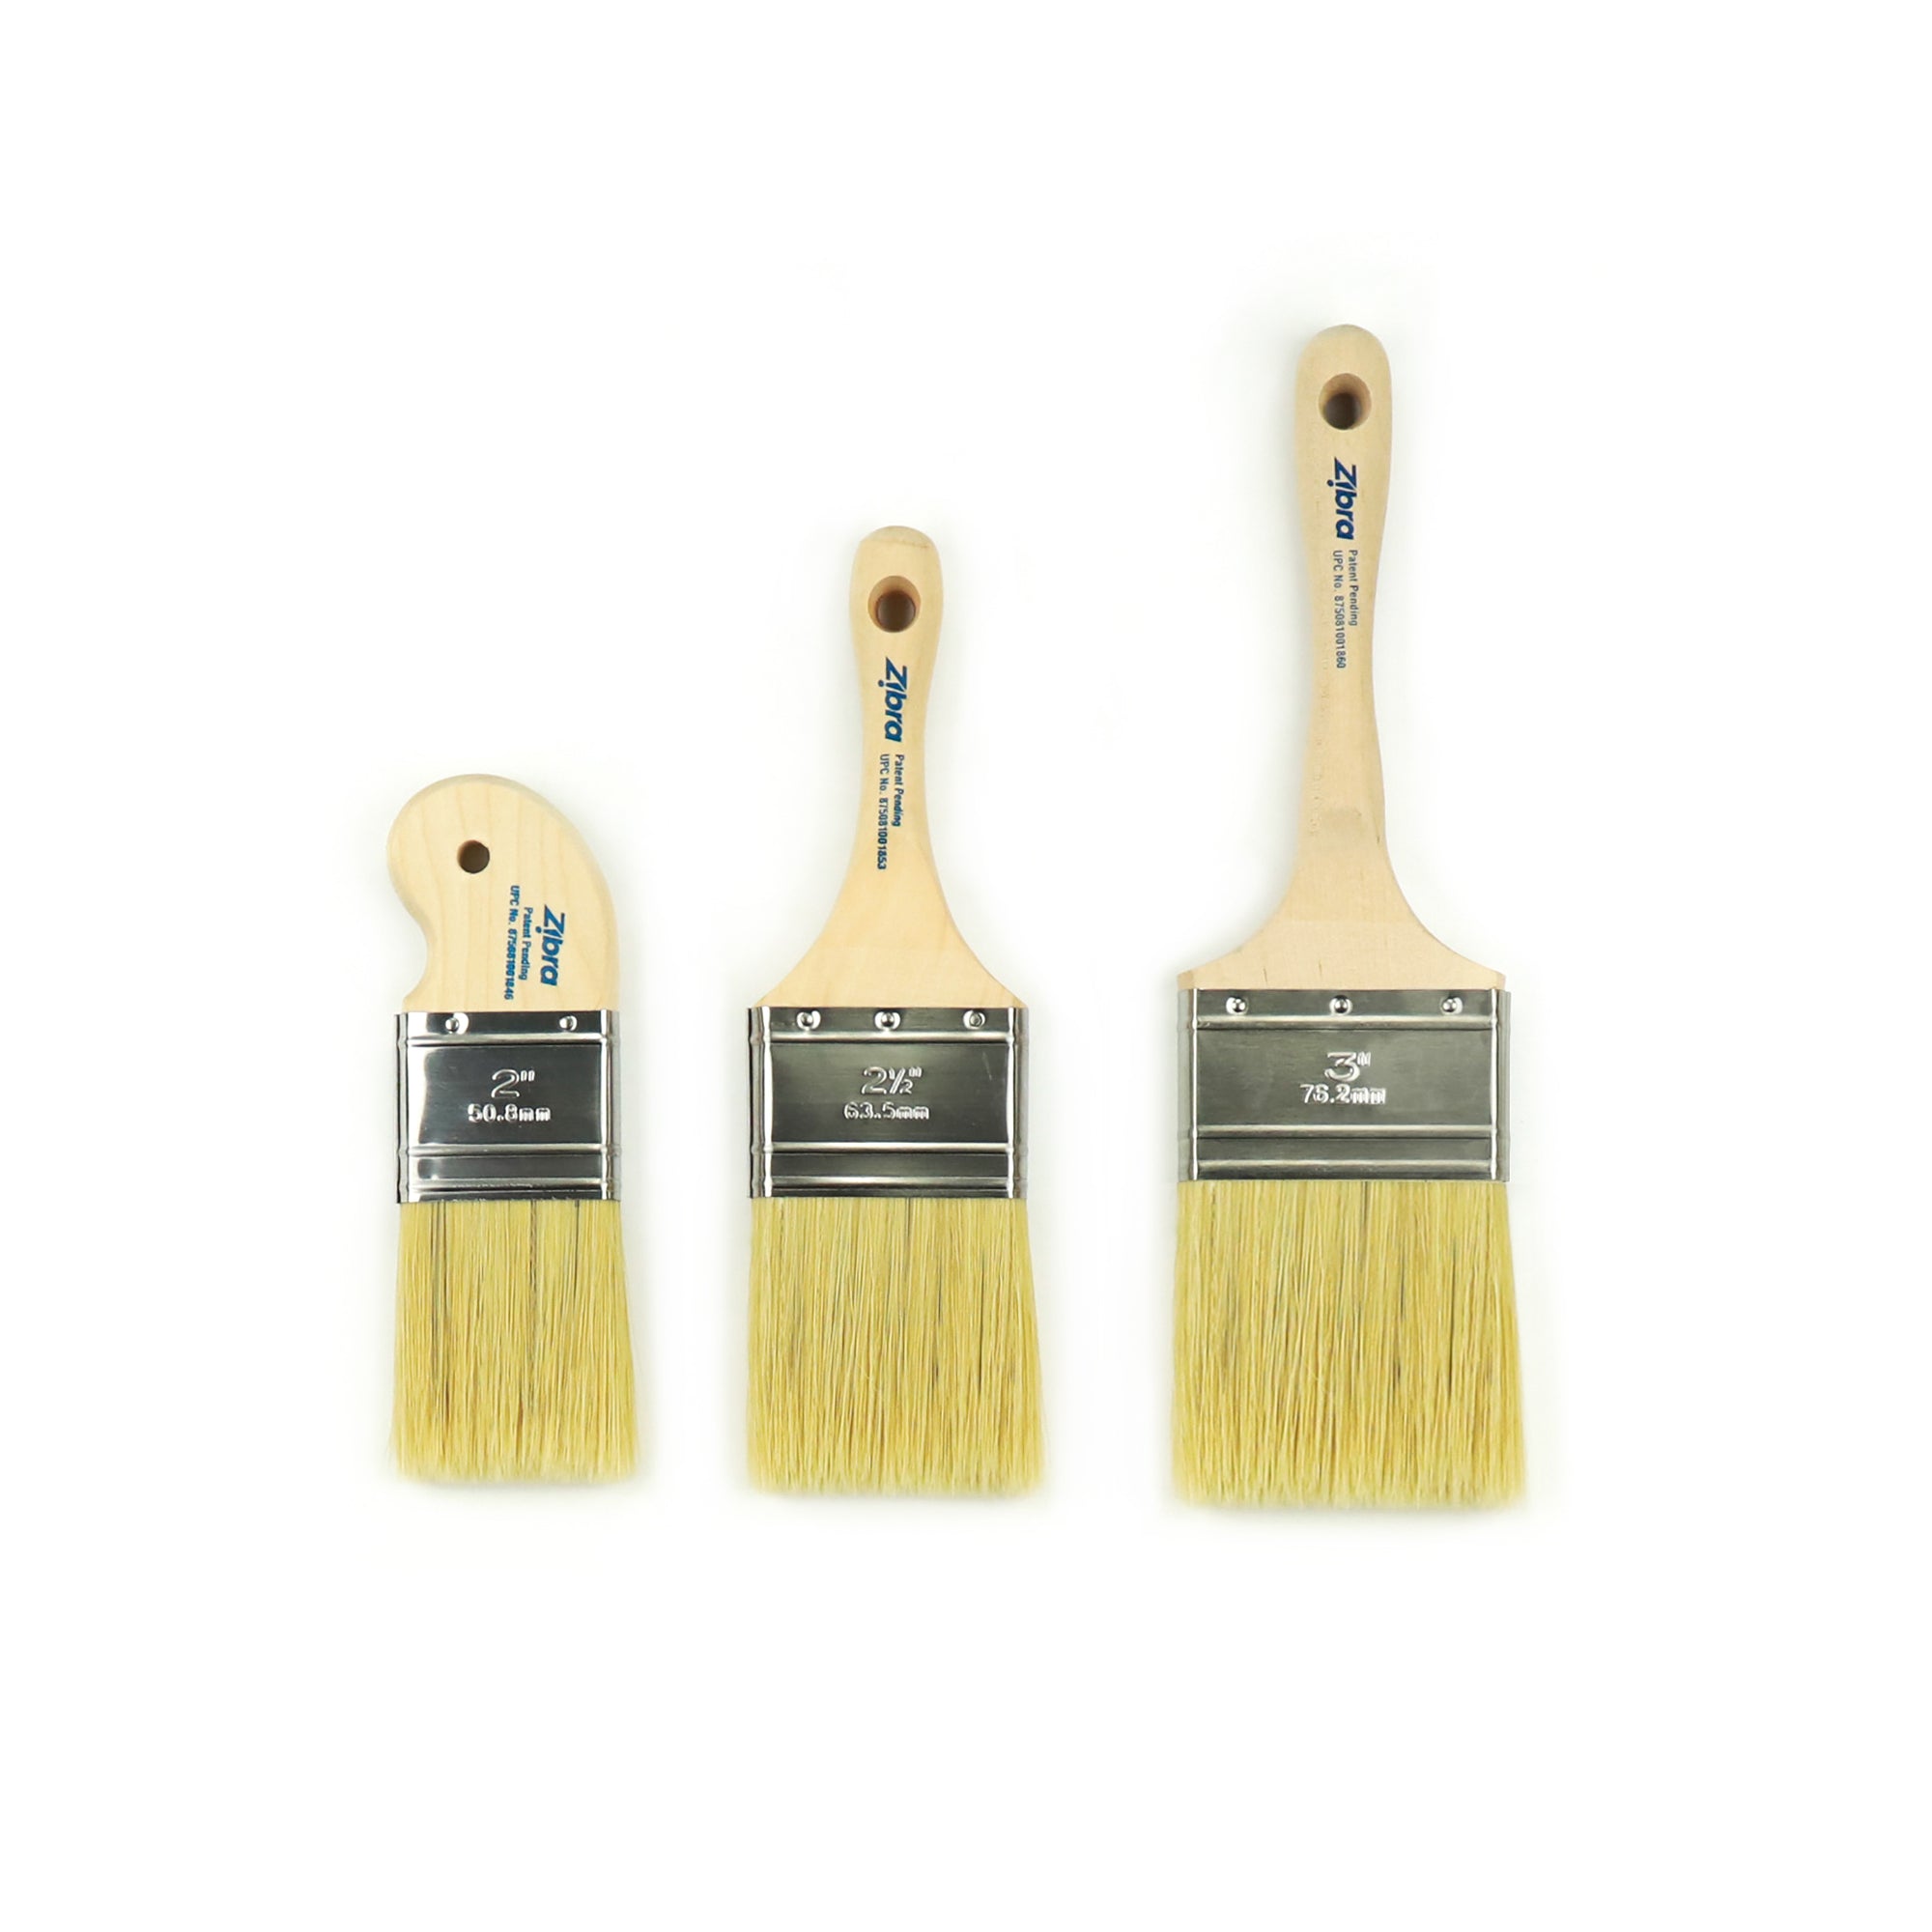 Zuko Soft Leather Brush – Shine Supply Benelux